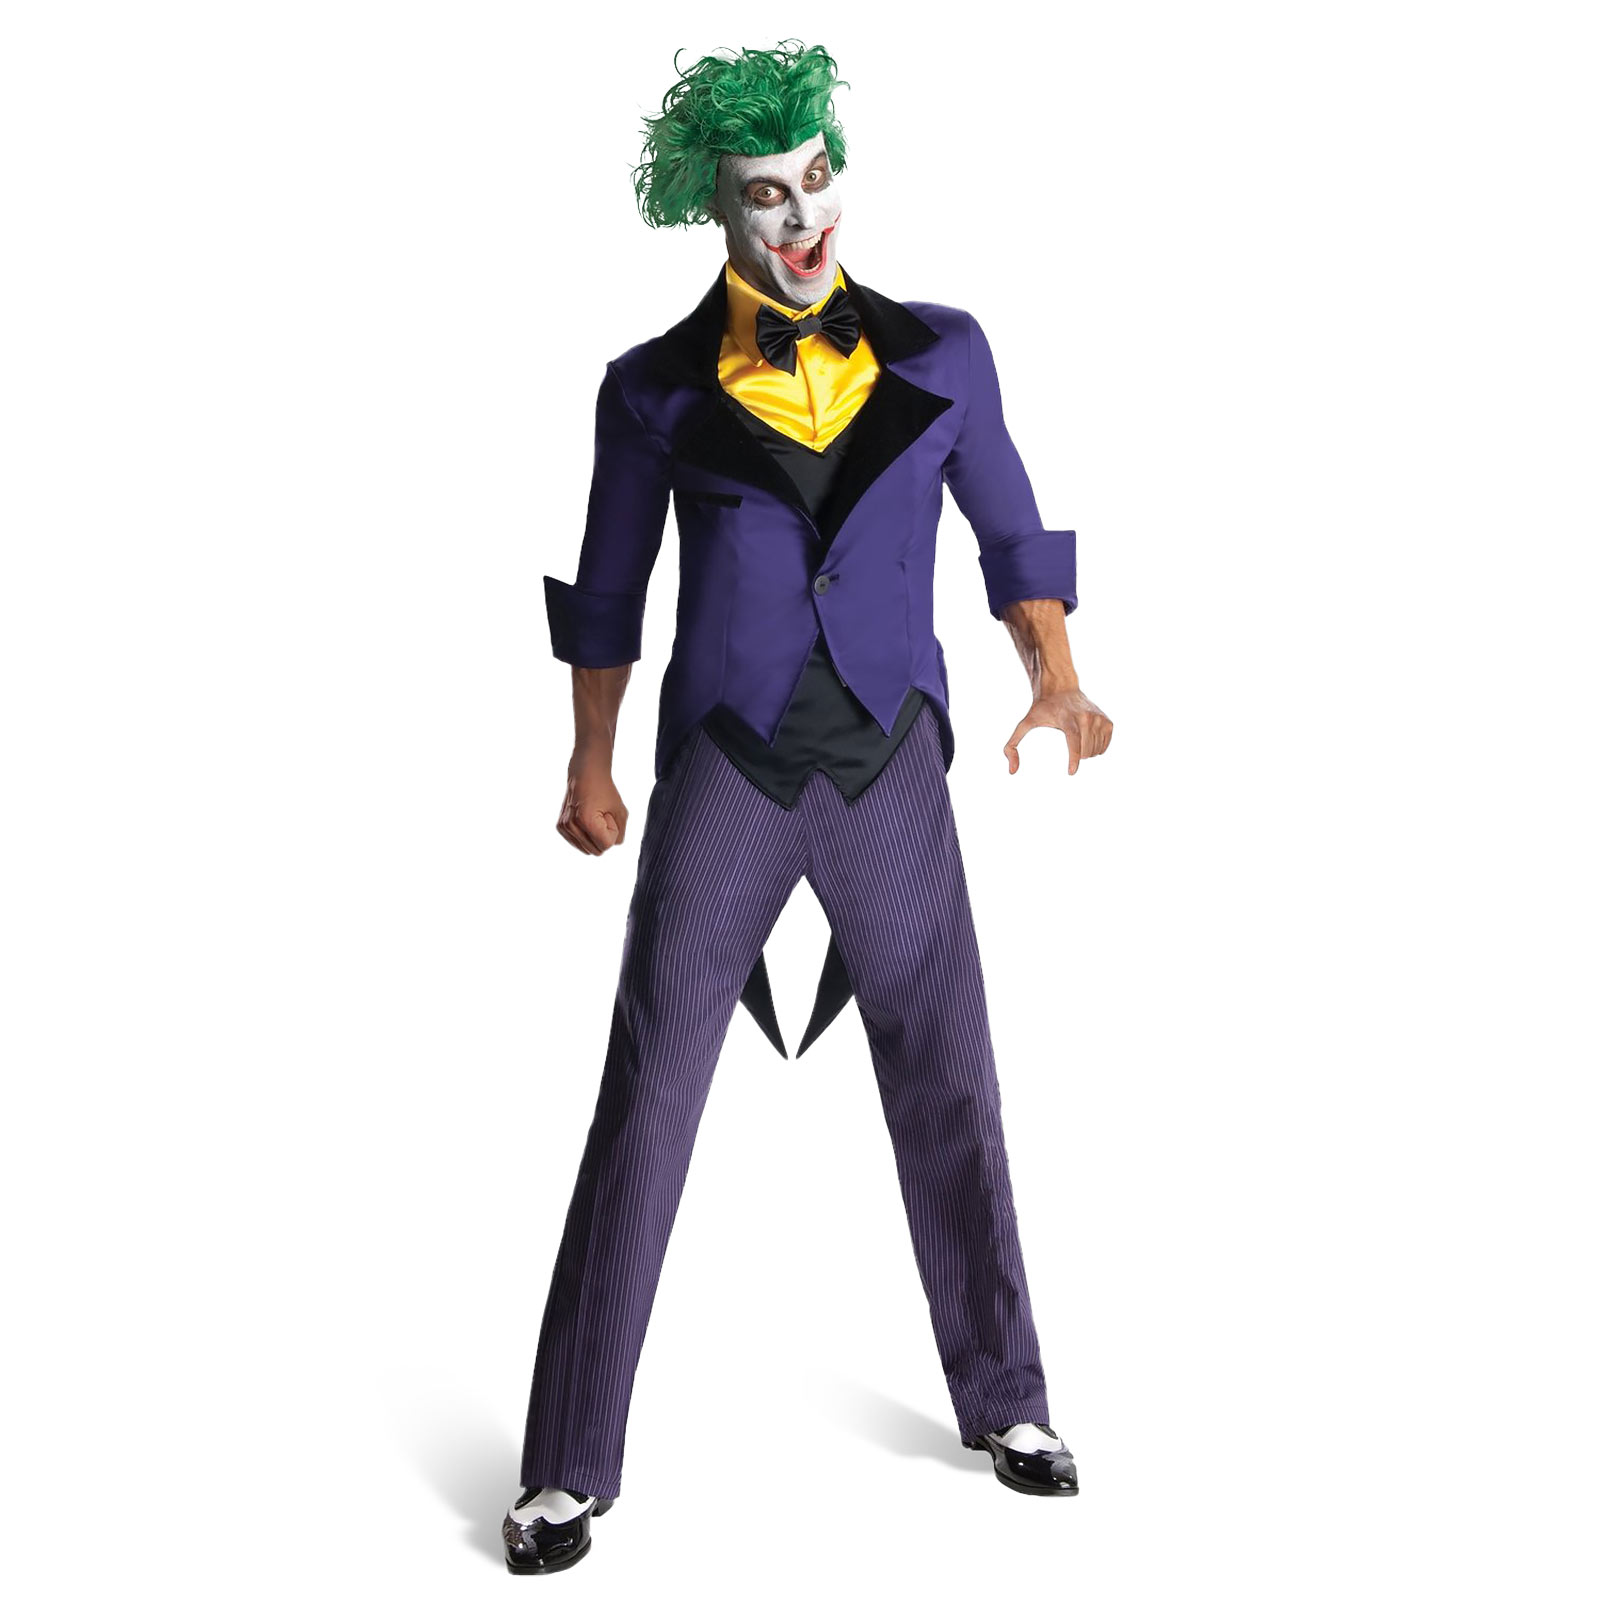 Batman - Costume du Joker de Gotham City